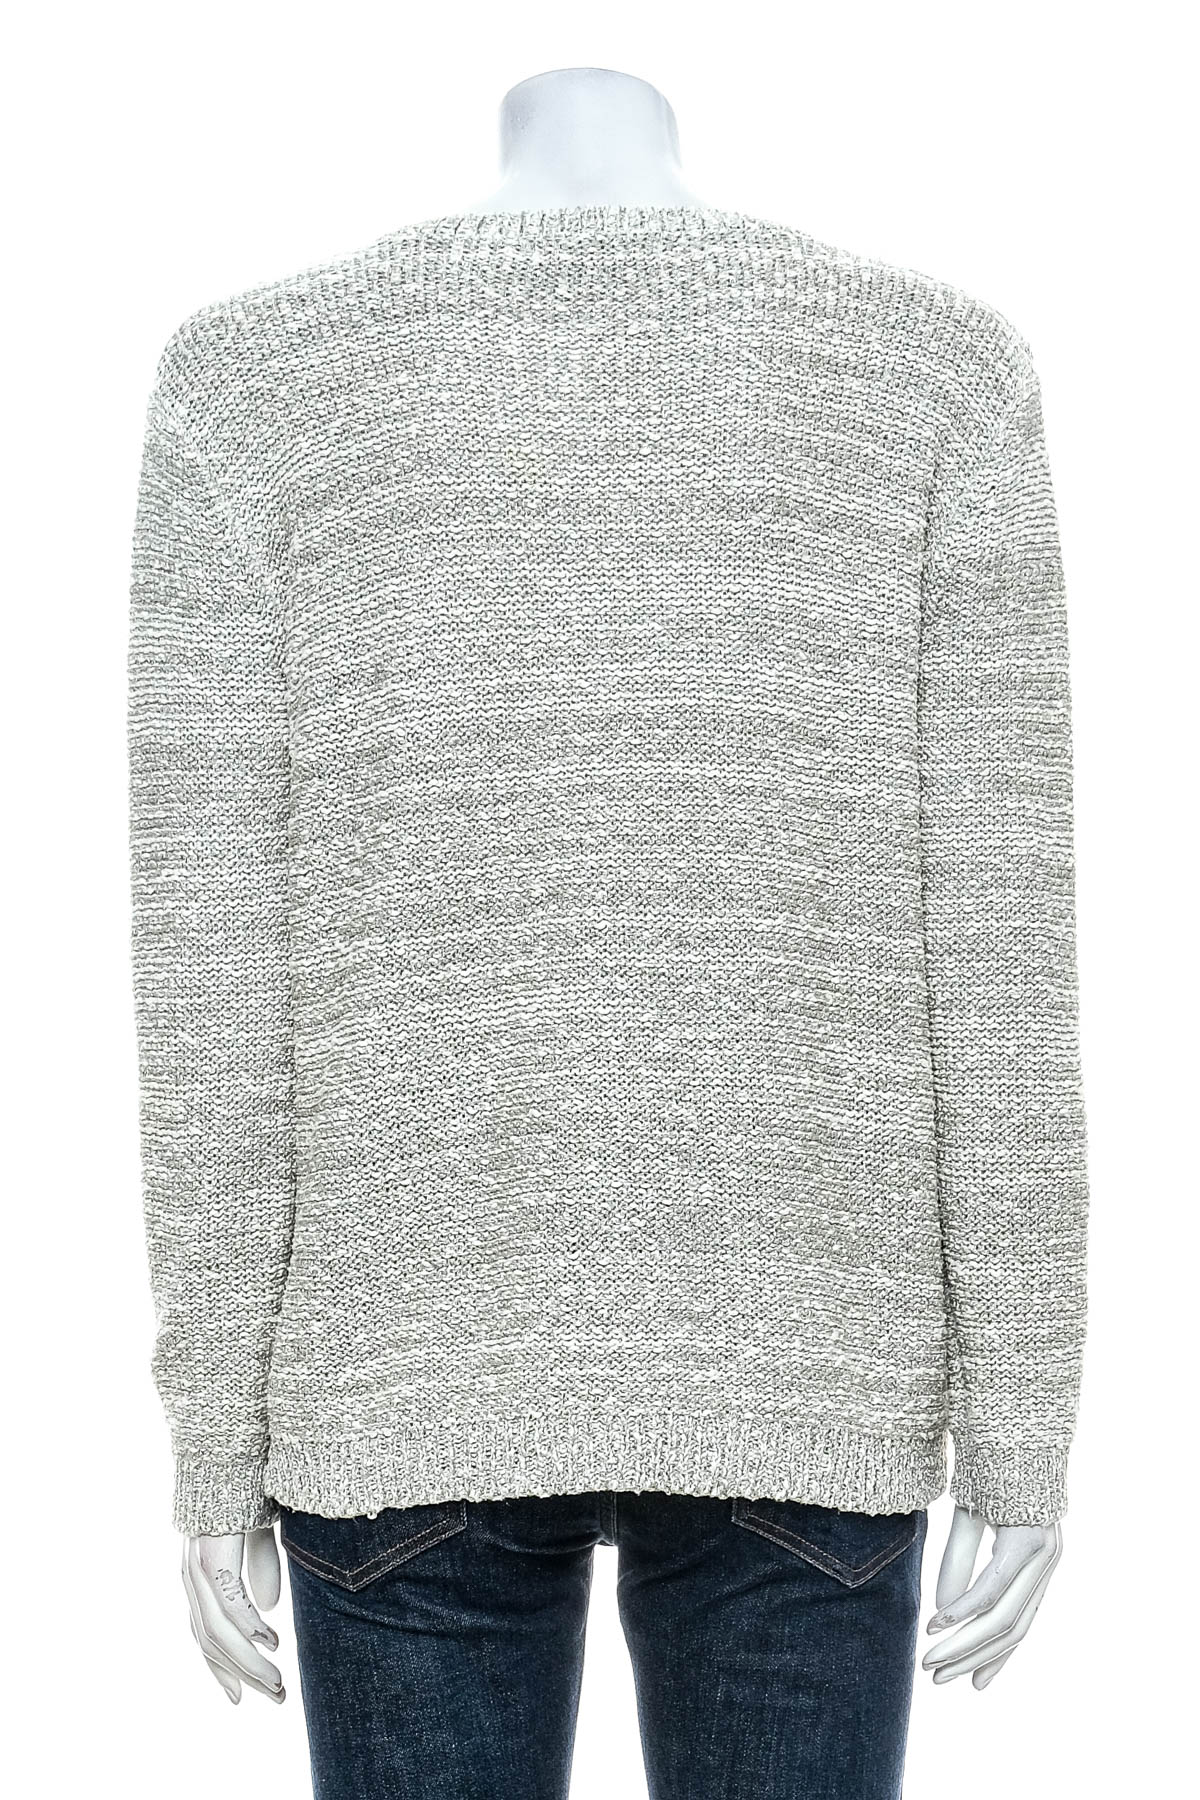 Дамски пуловер - M&S Woman - 1